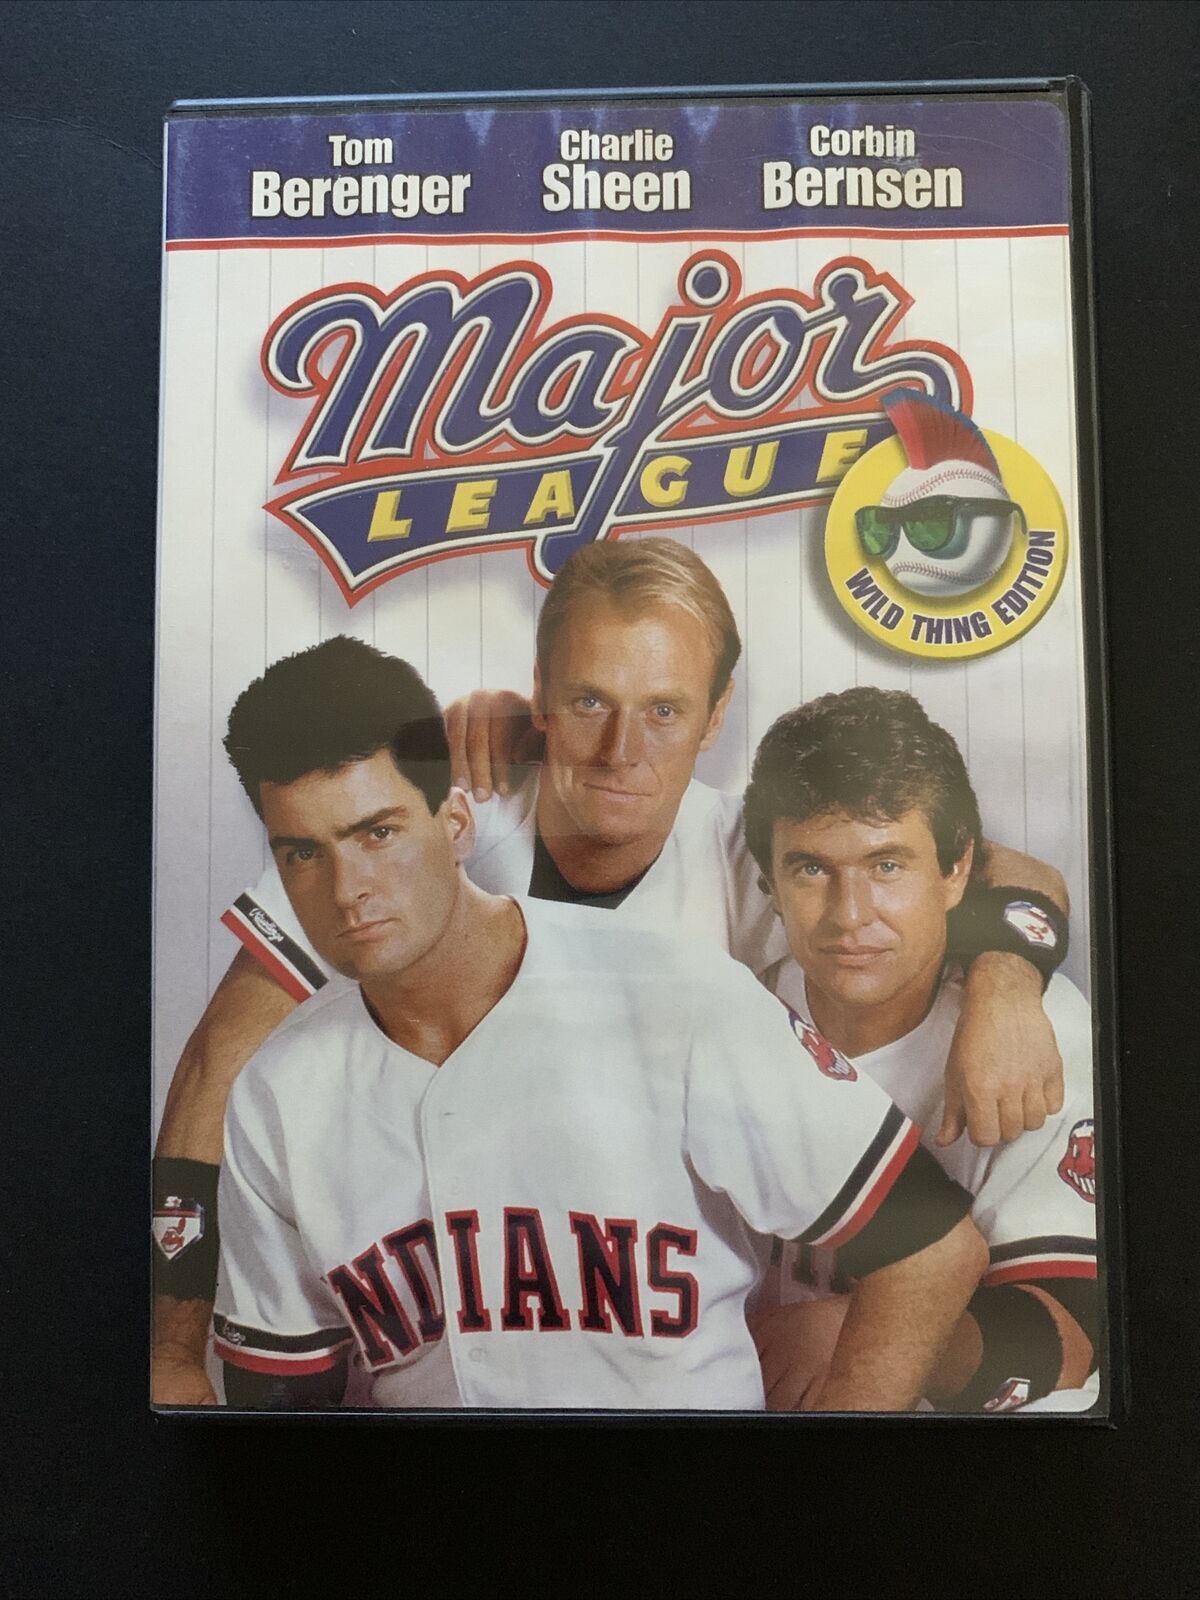 Major League - Wild Thing Edition(DVD, 1989) Tom Berenger, Charlie Sheen Region1